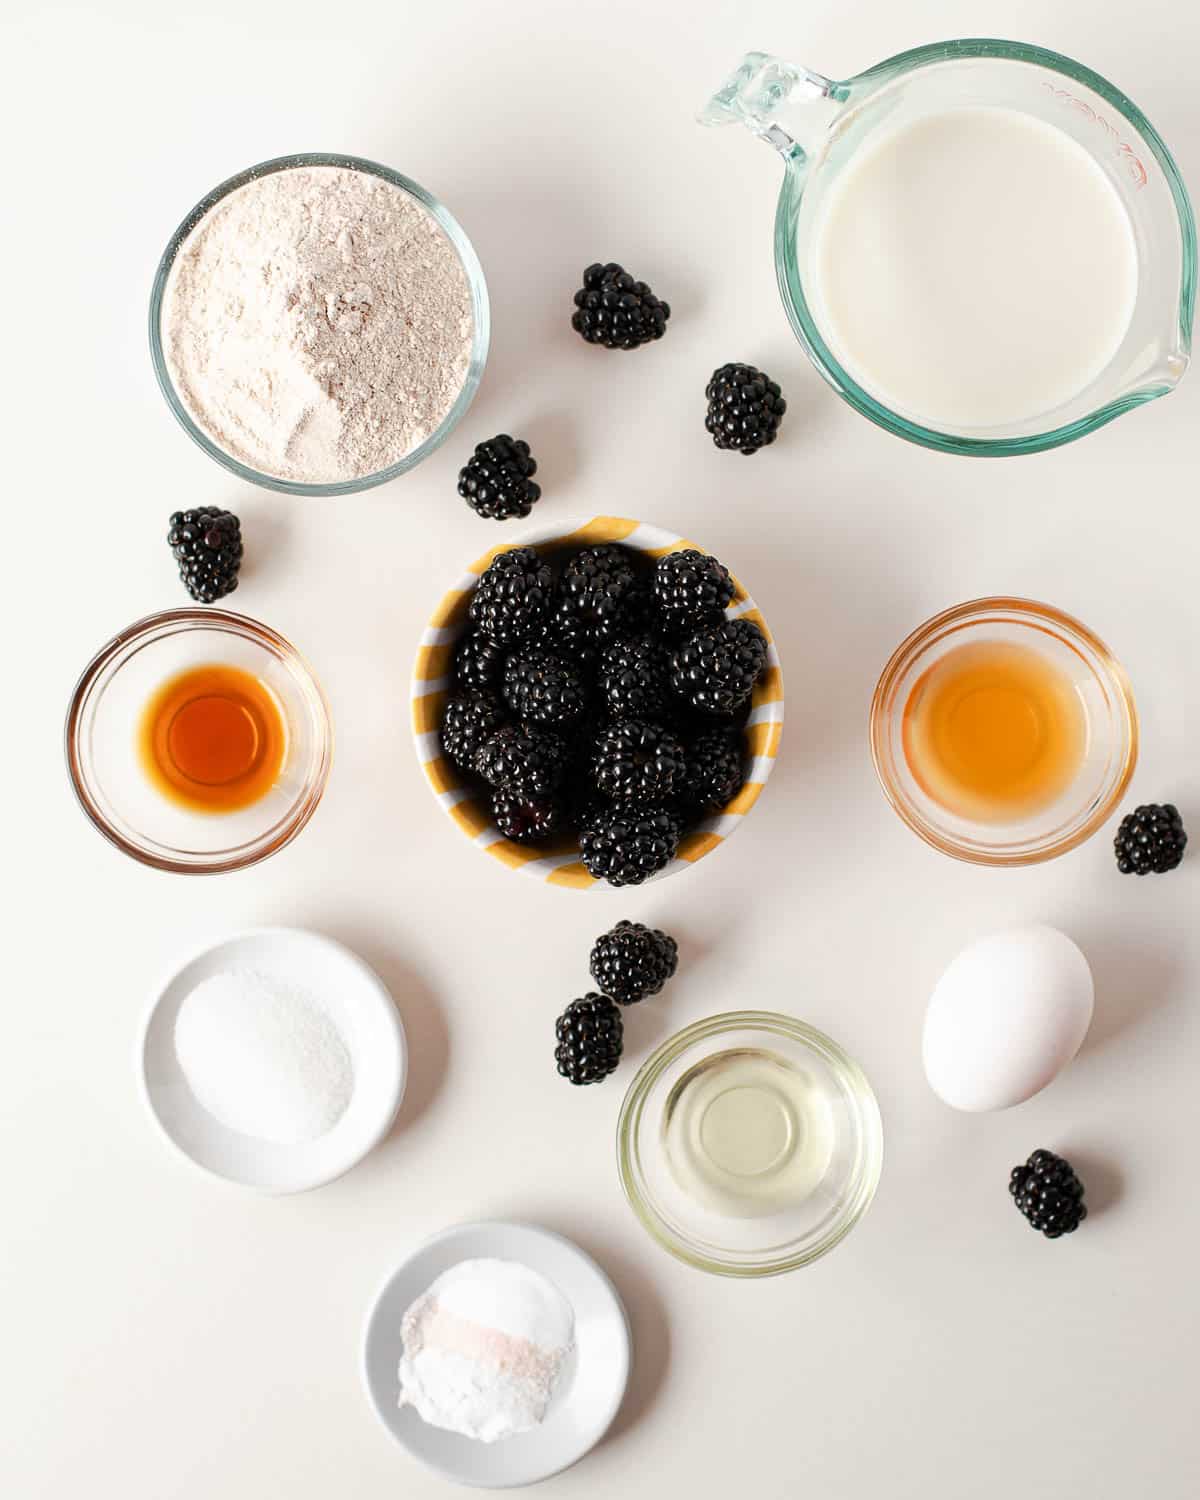 Simple ingredients for this blackberry pancake recipe